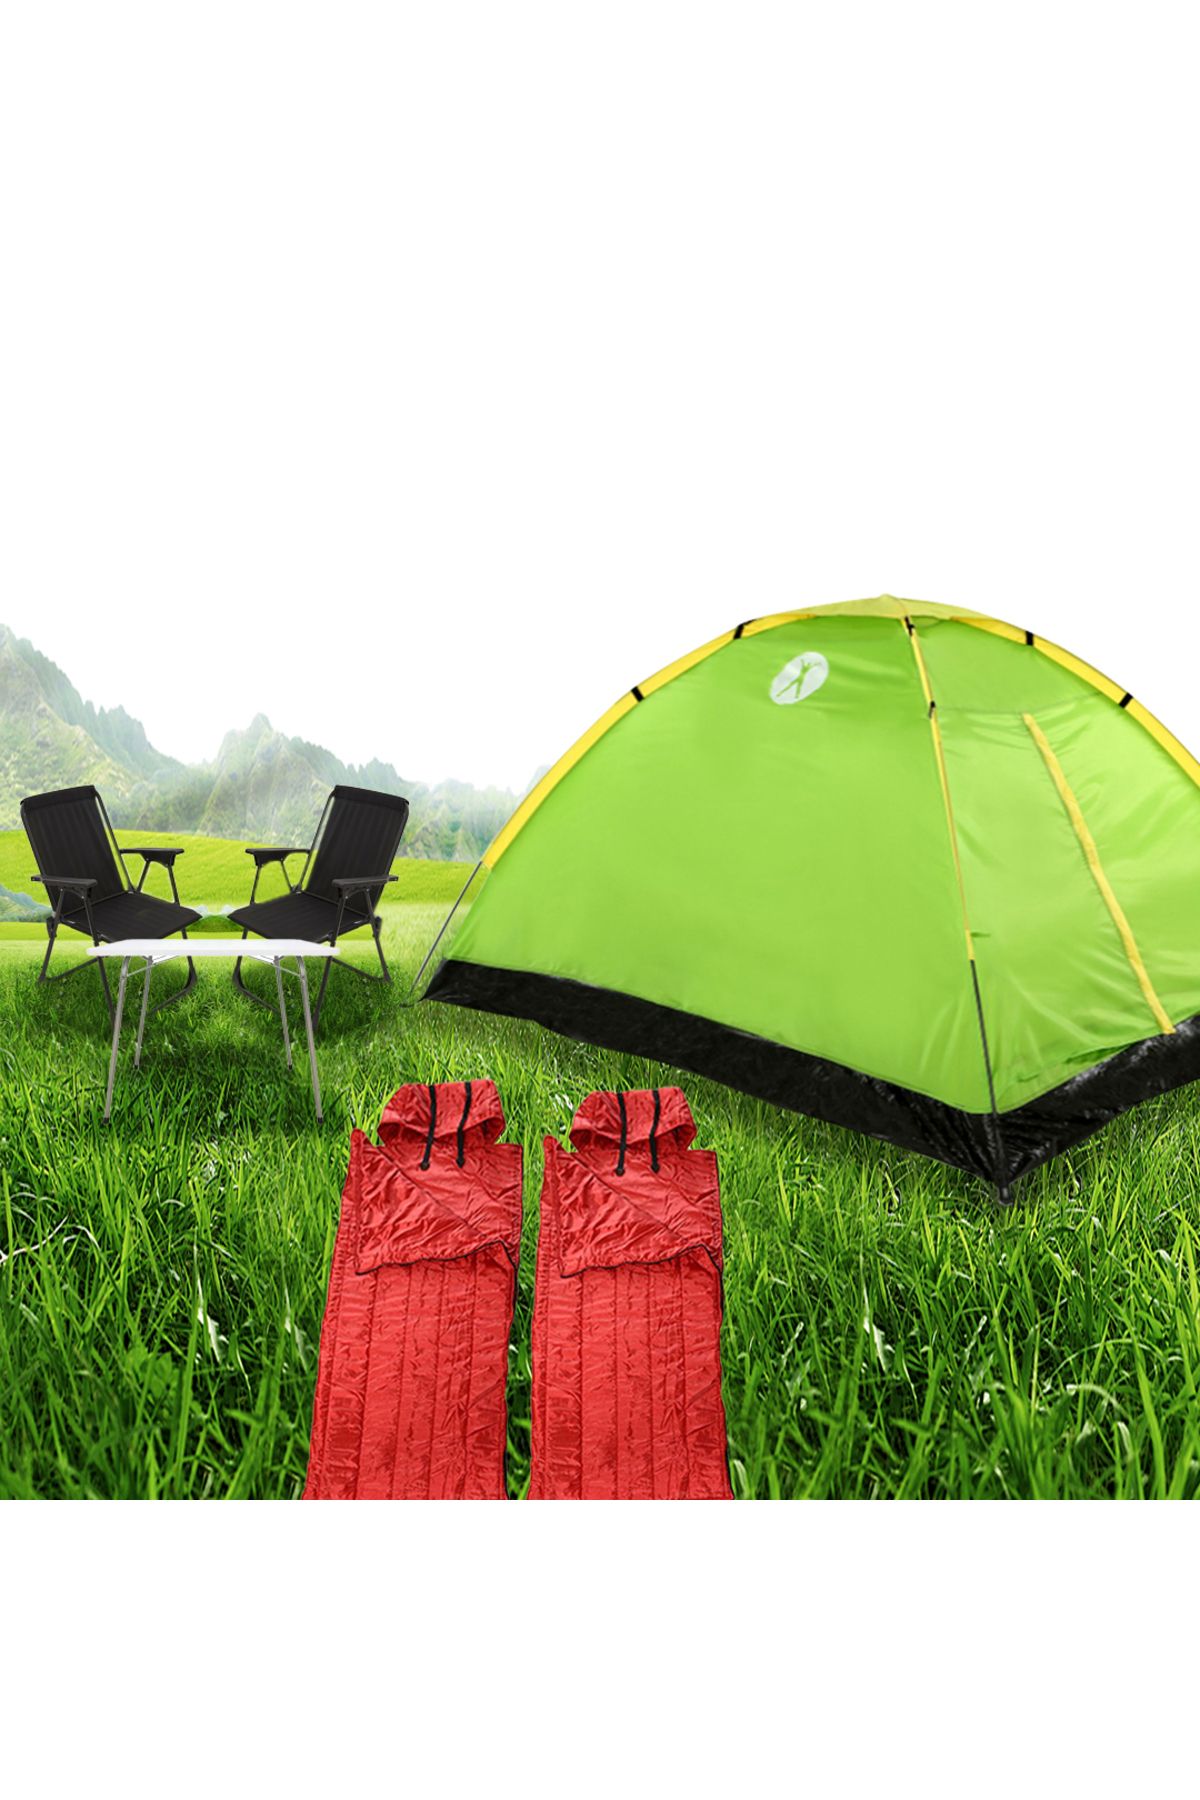 kaya camping outdoor Temel Kamp Seti, Çadır Seti, Sandalye Seti